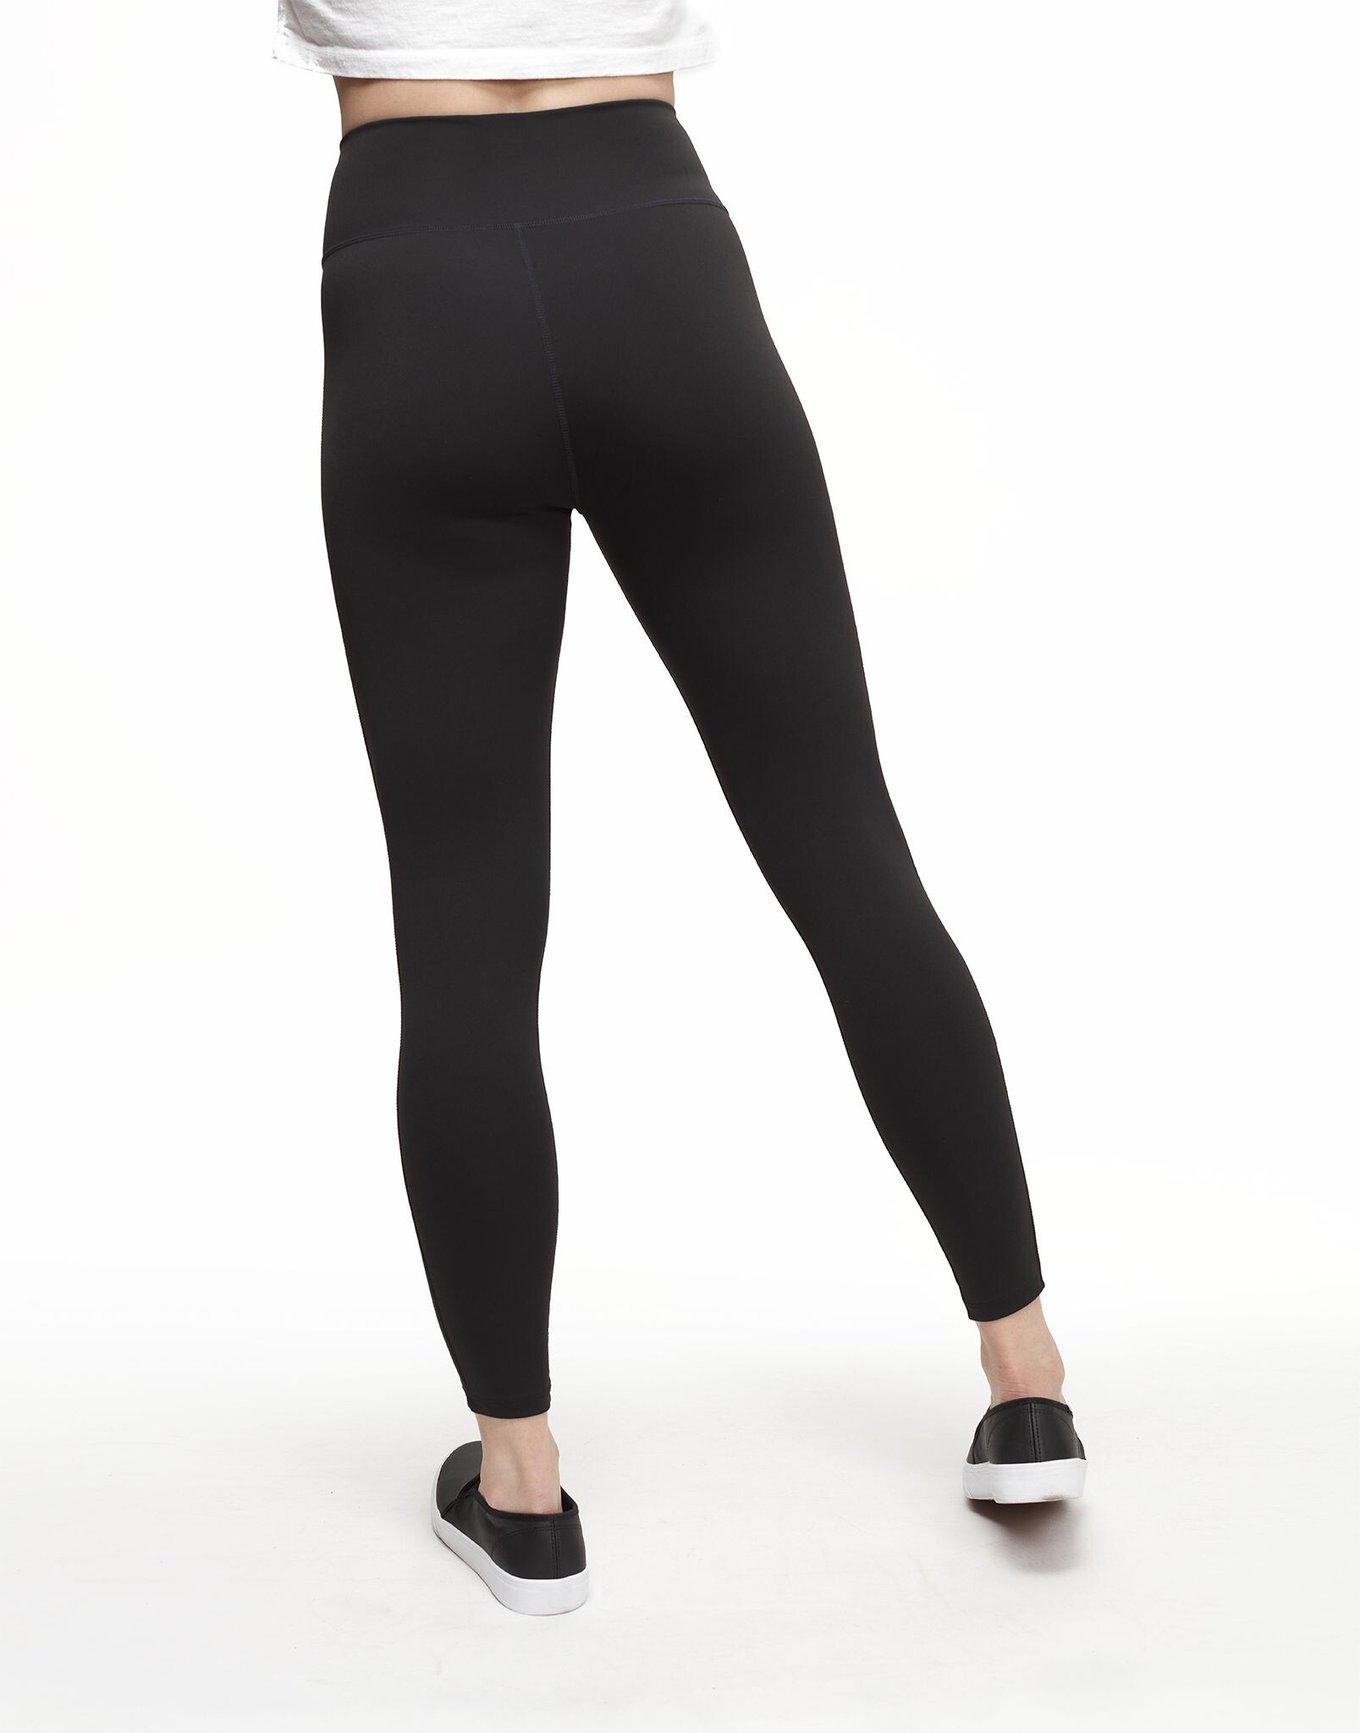 Stay Powerful leggings by Calia  Leggings, Clothes design, Calia